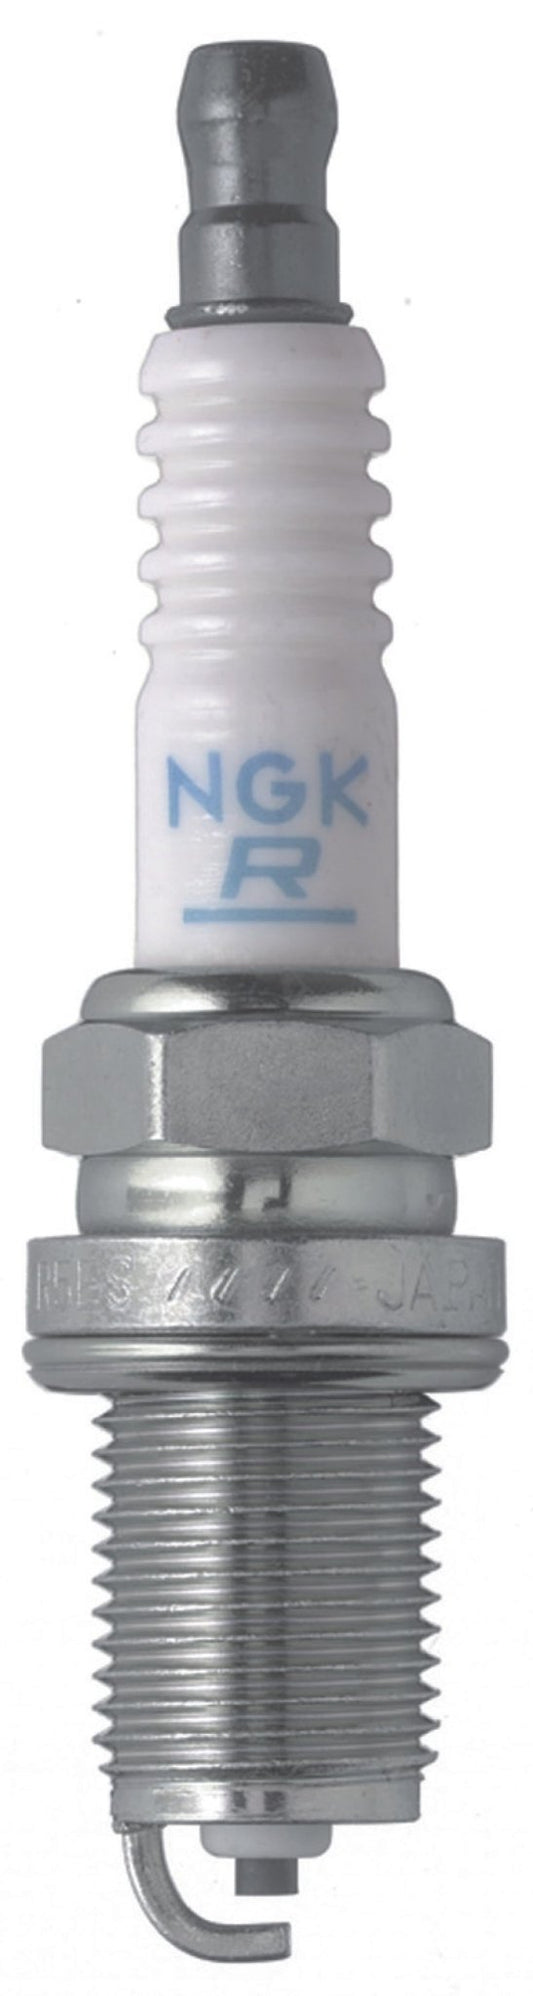 NGK - NGK Commercial Series Spark Plug (CS6 S100) - 100 Pack - Demon Performance